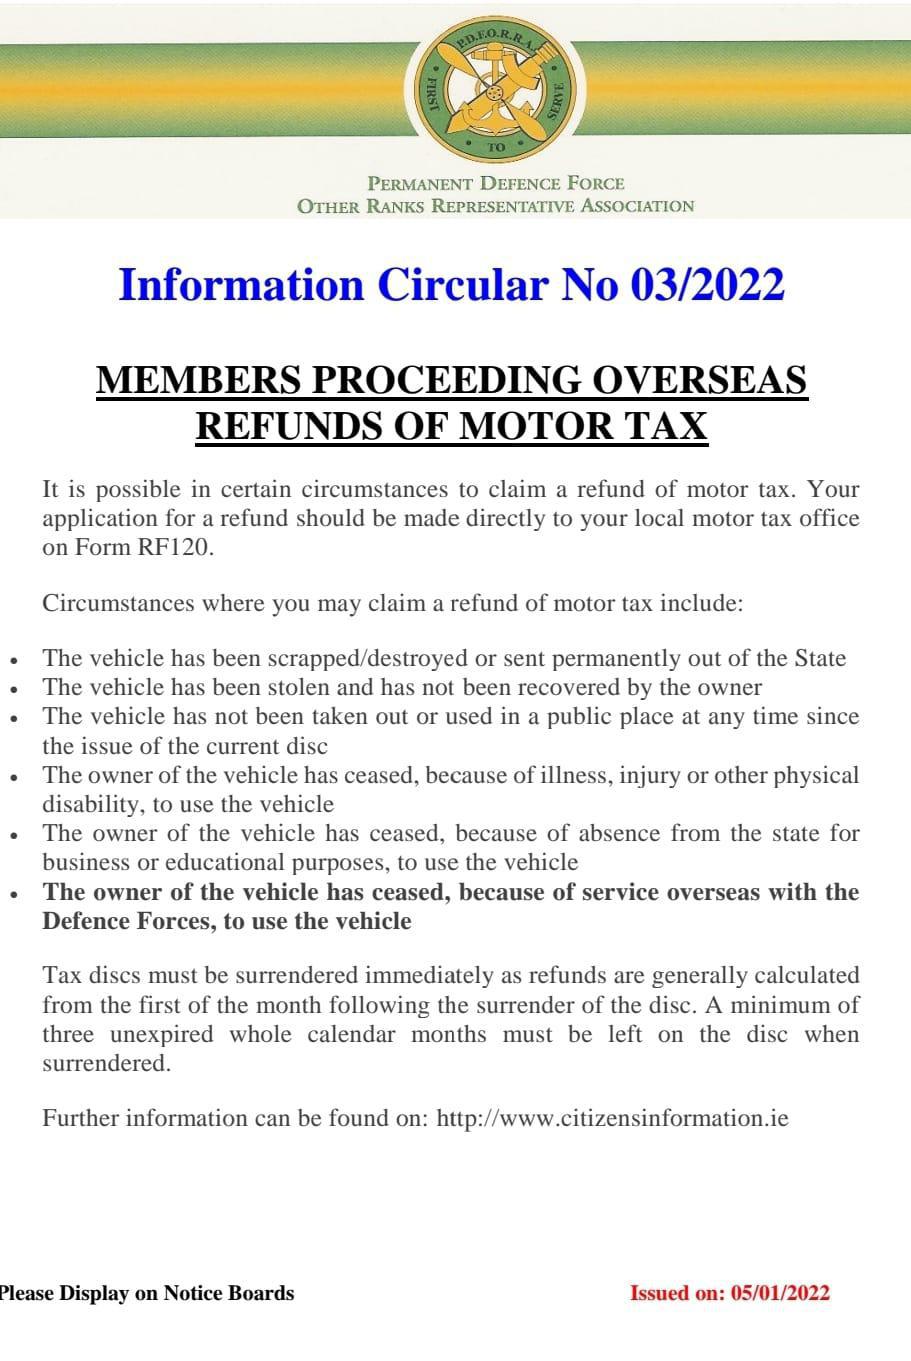 Information Circular No 03 of 22 - Members proceeding Overseas refunds of Motor Tax